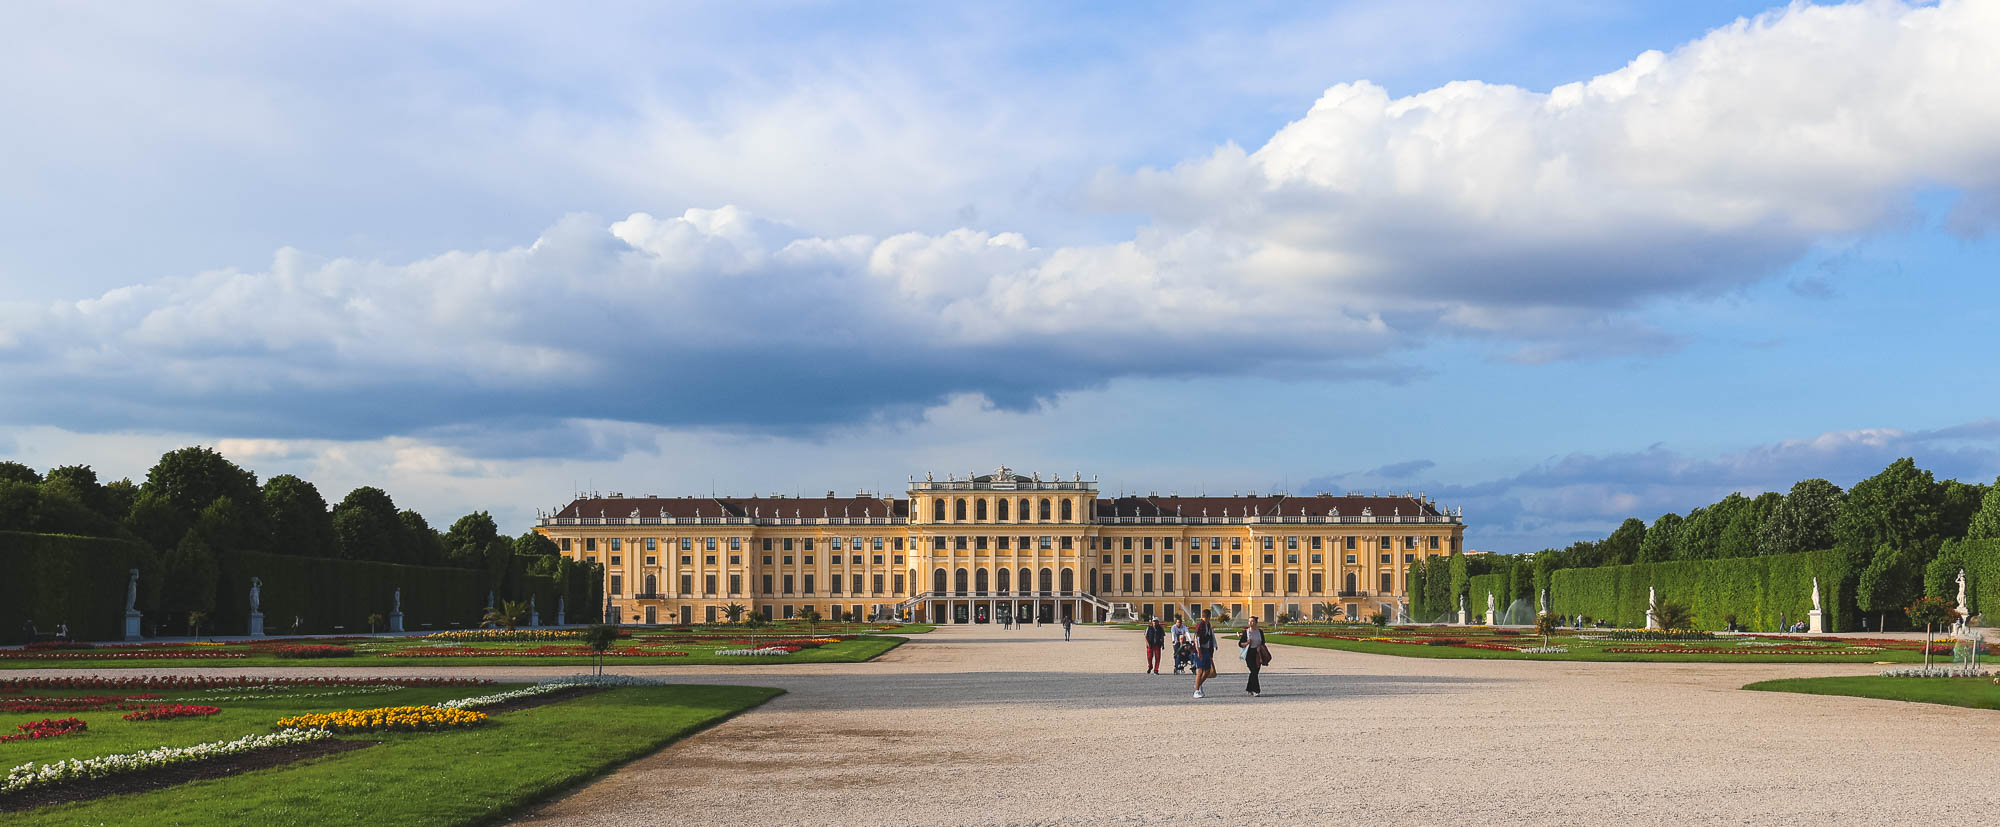 Backyard of Schönbrunn Palace in Hietzing, Vienna